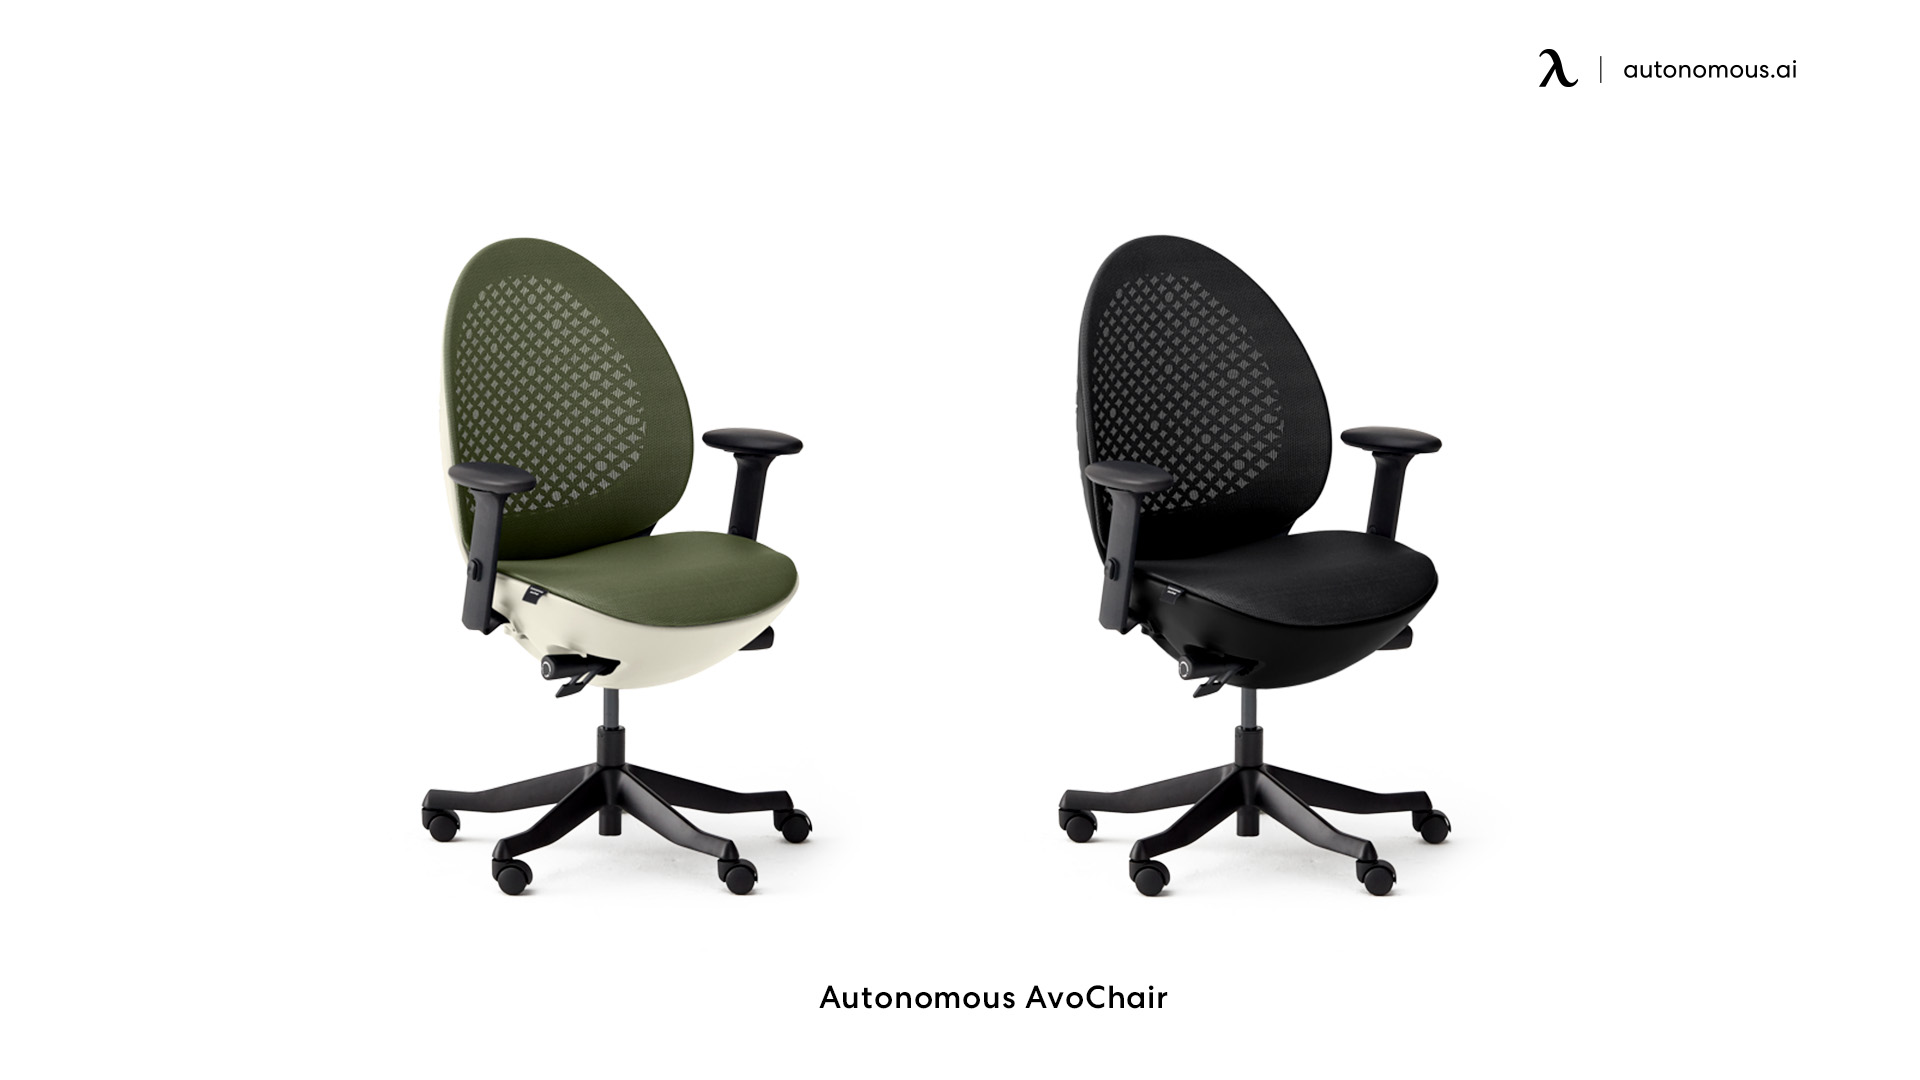 AvoChair stylish ergonomic office chair